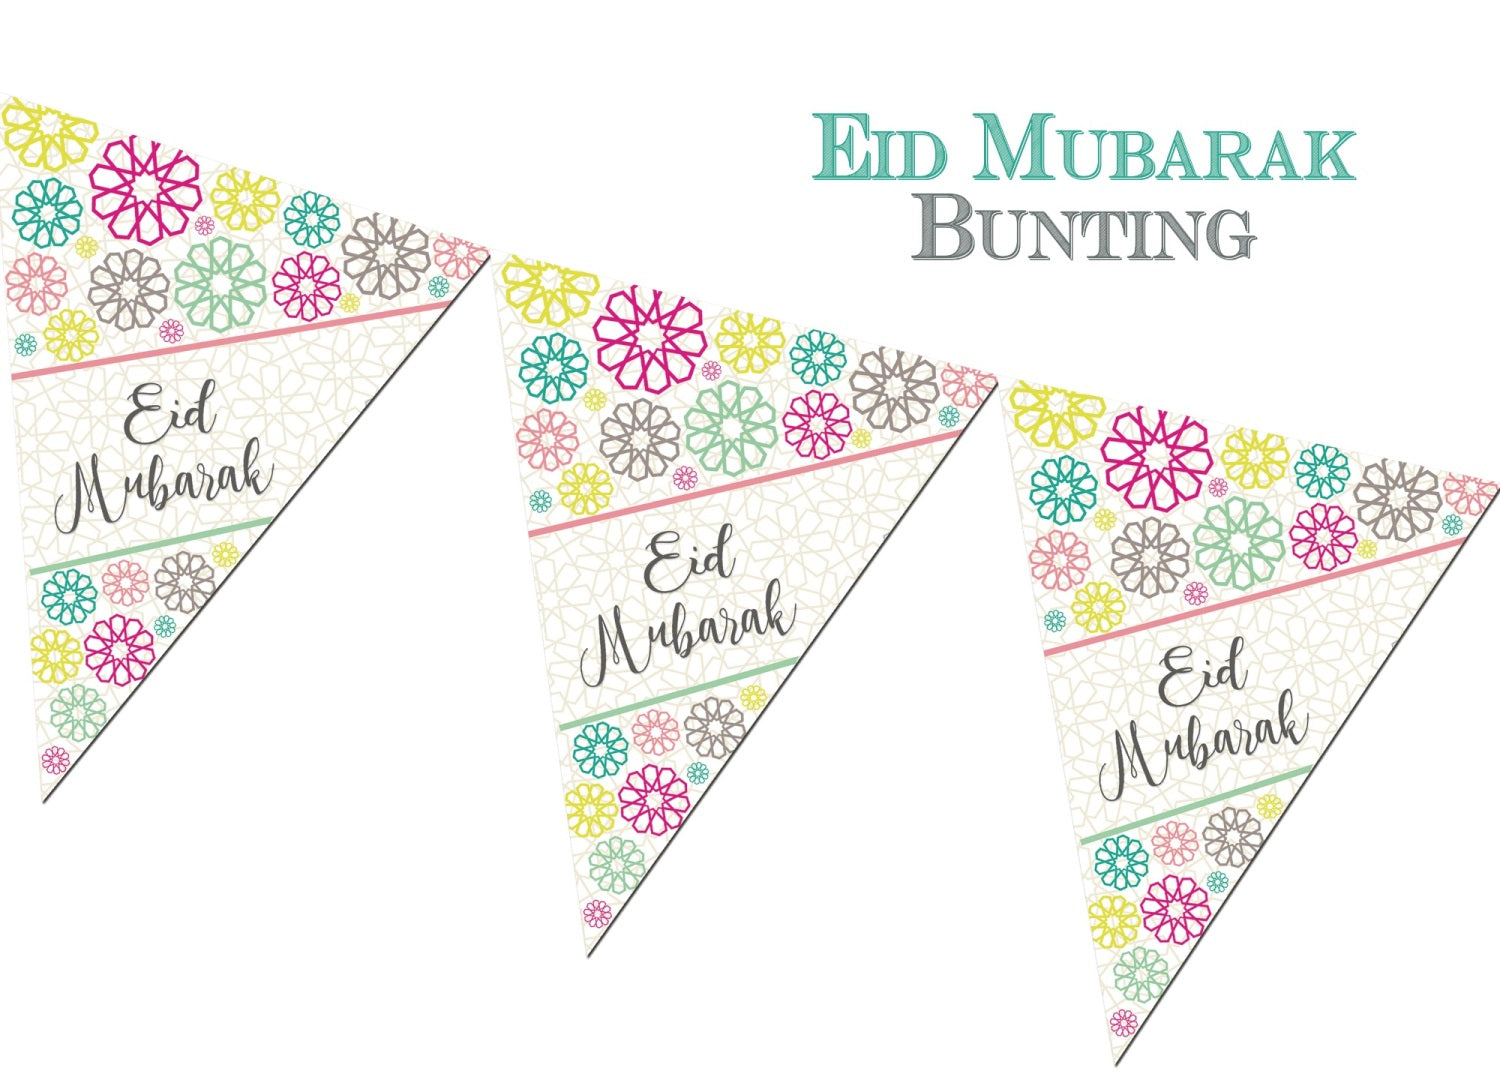 Eid Mubarak Bunting - Geo - JLifestyle Store